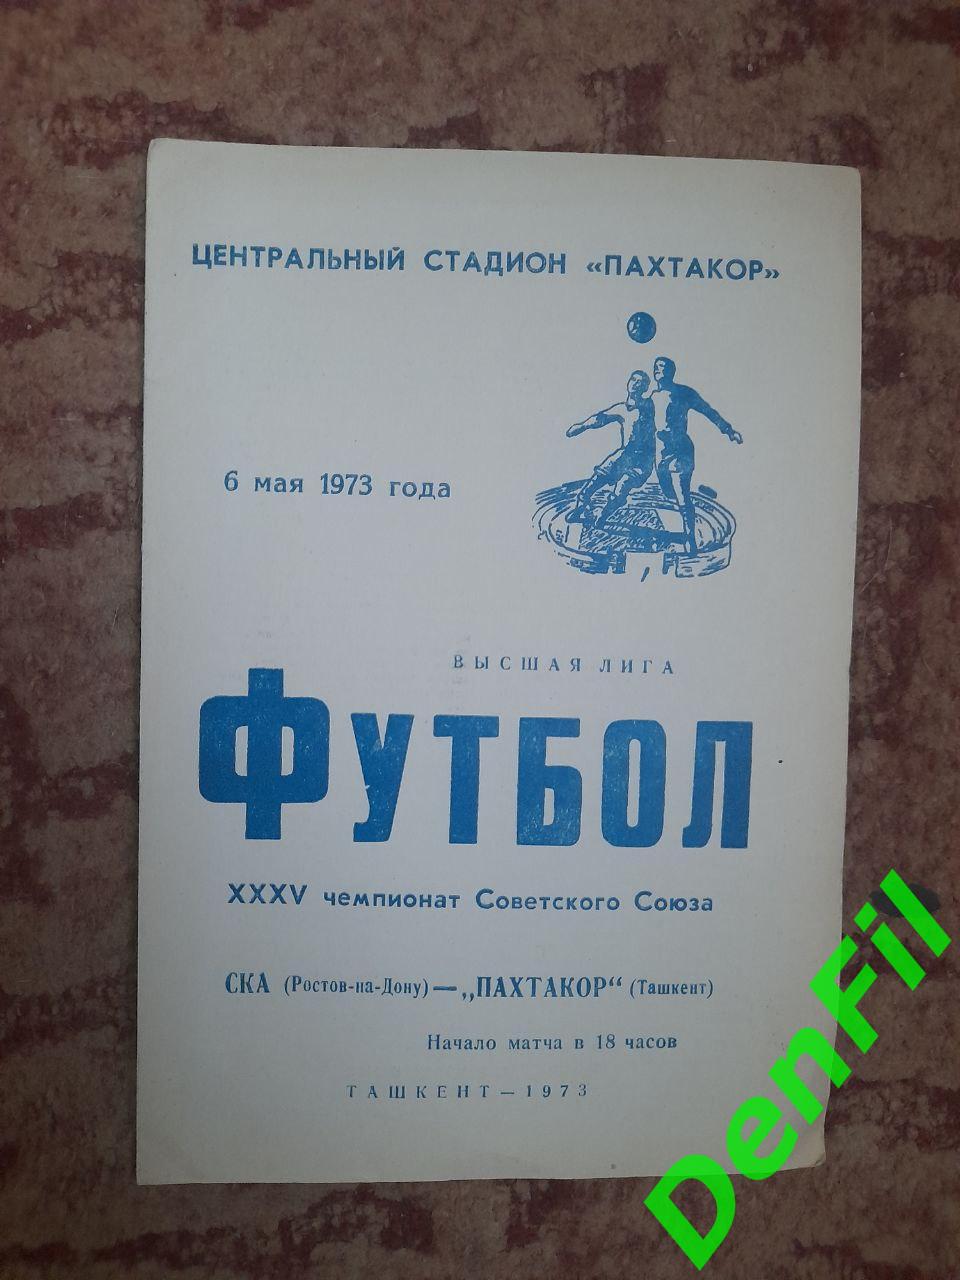 Пахтакор Ташкент - СКА Ростов-на-Дону 1973